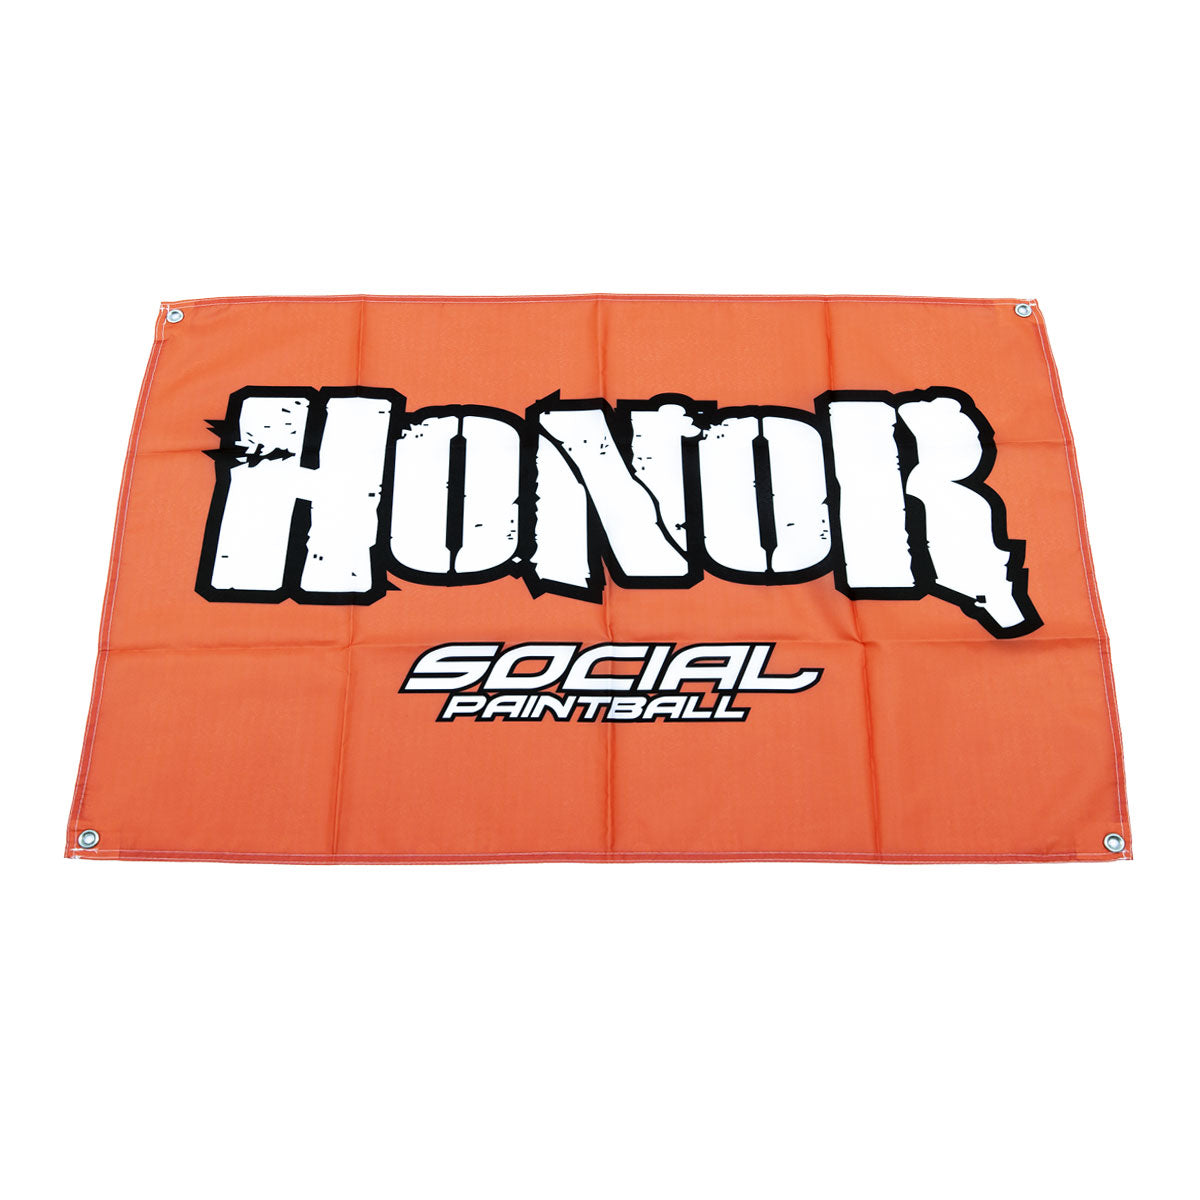 Social Paintball Banner - Honor - Social Paintball